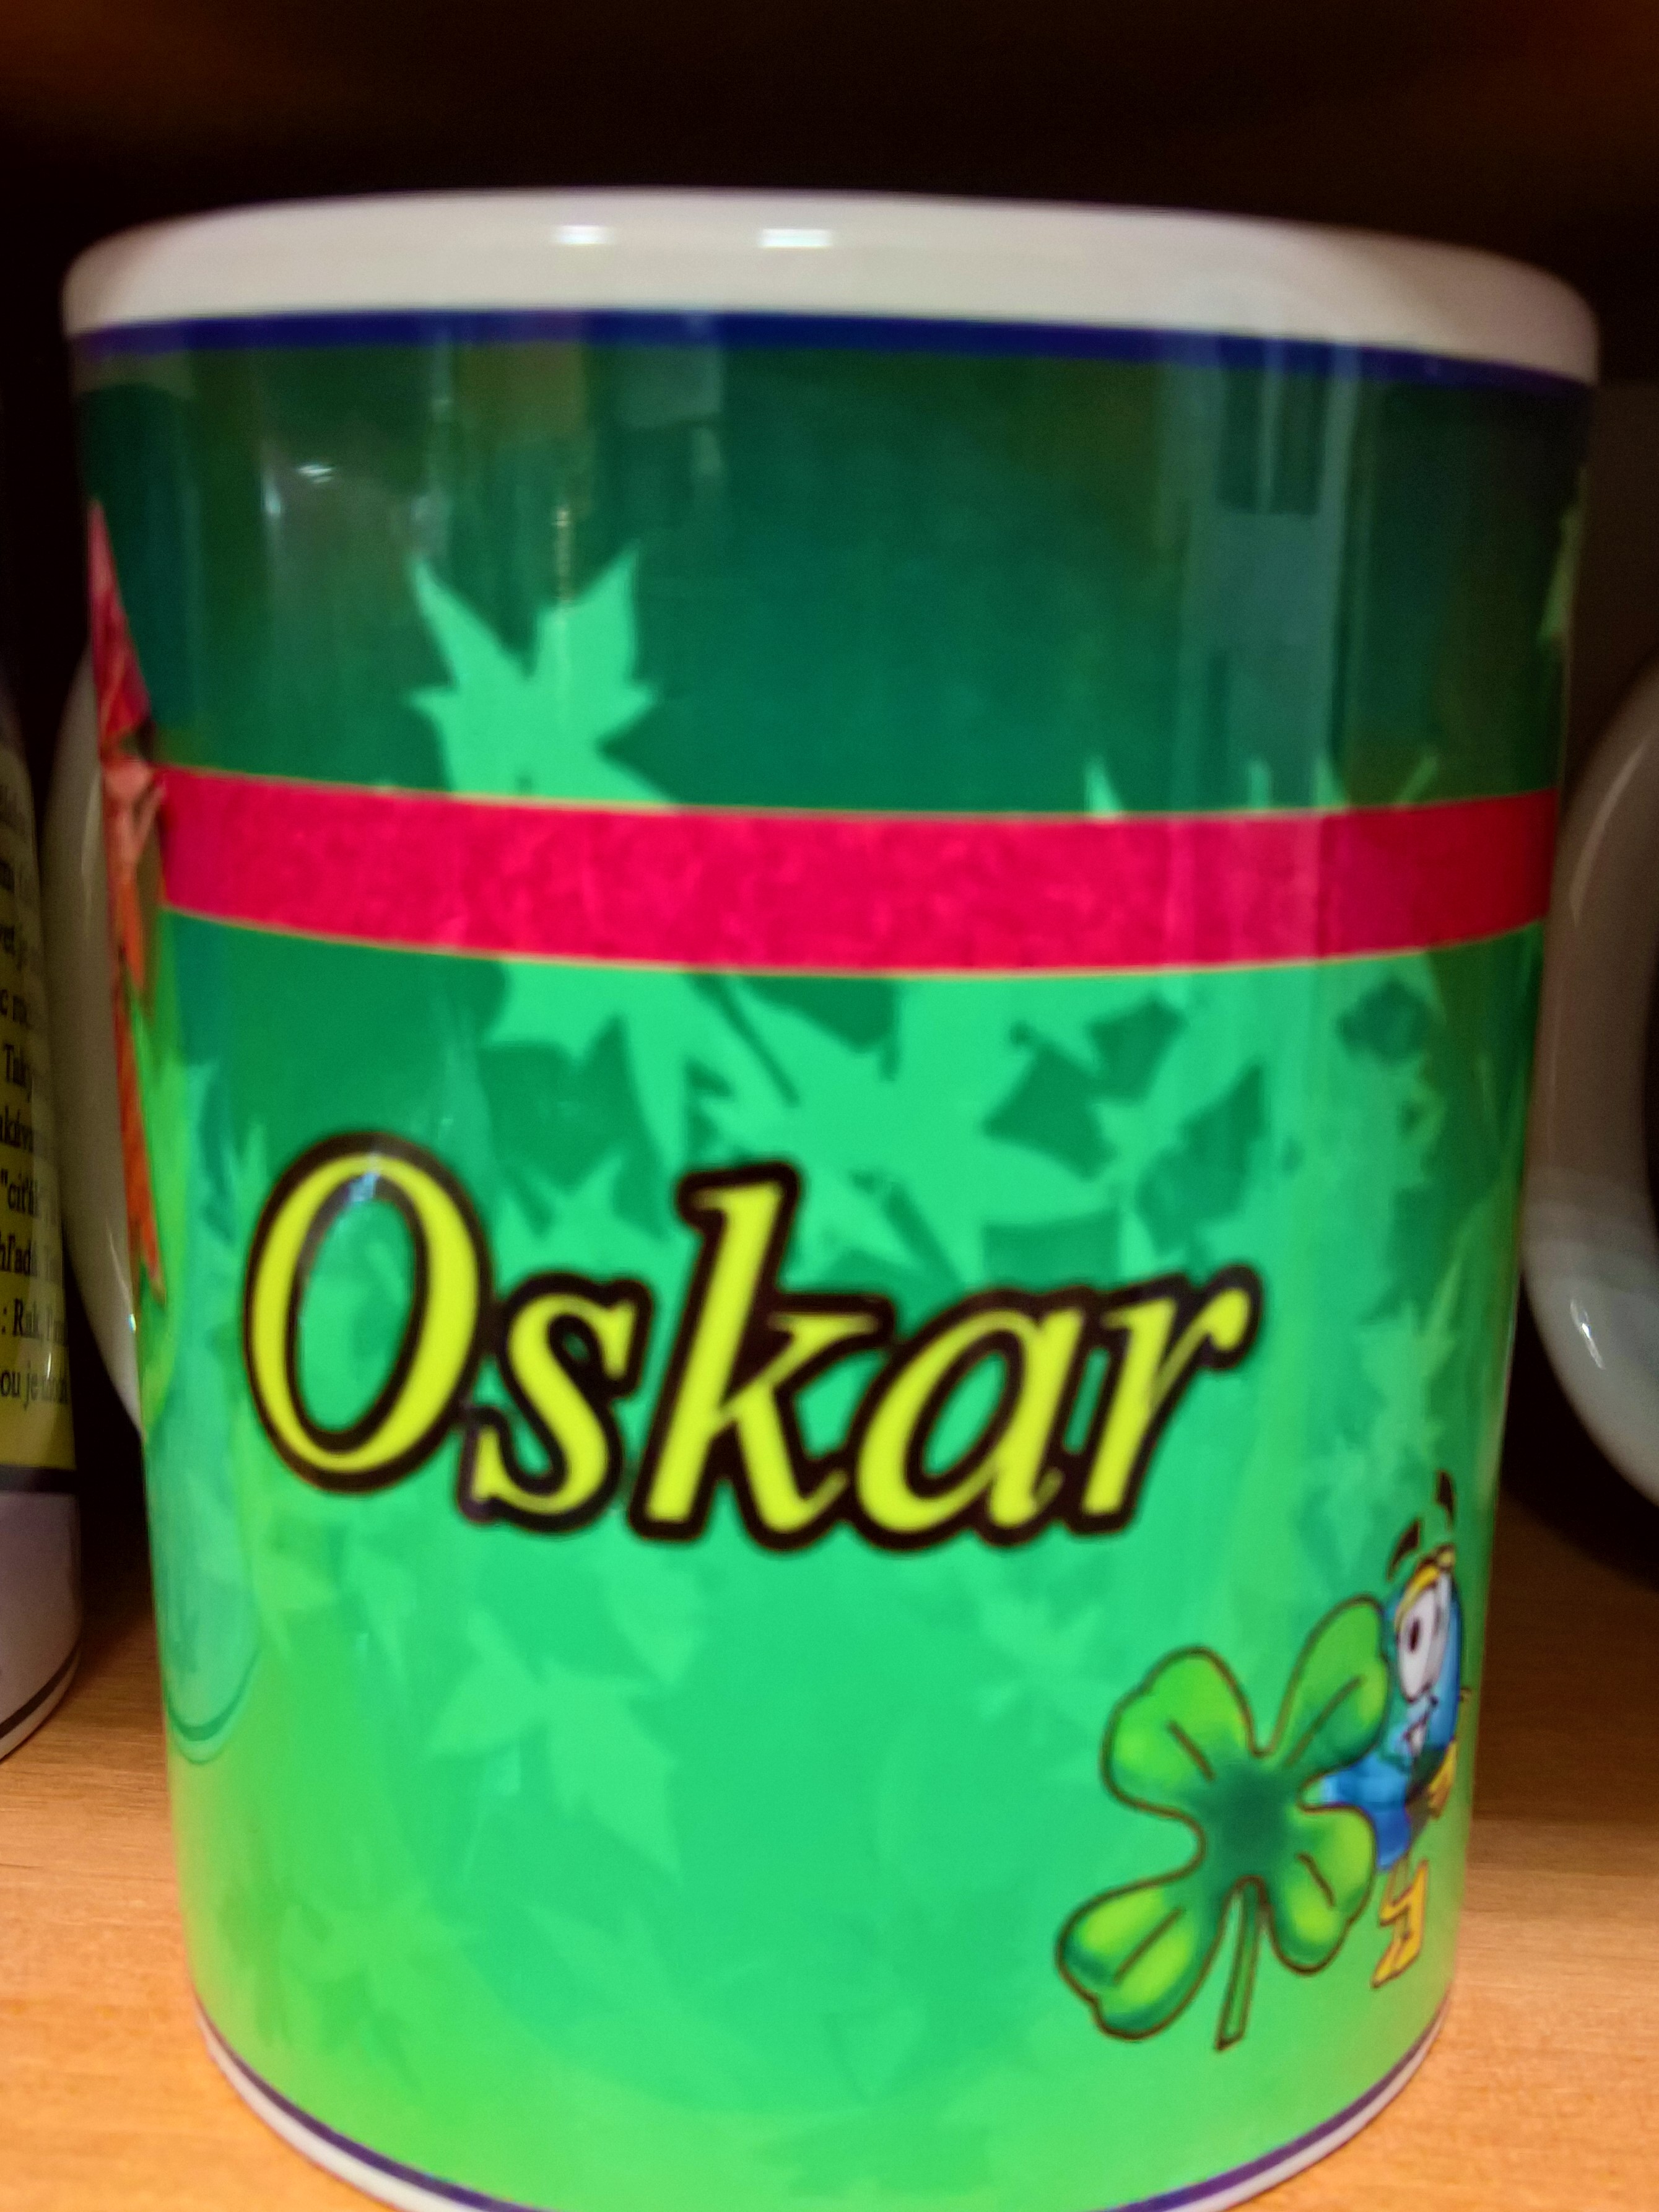 Hrnček "Oskar"